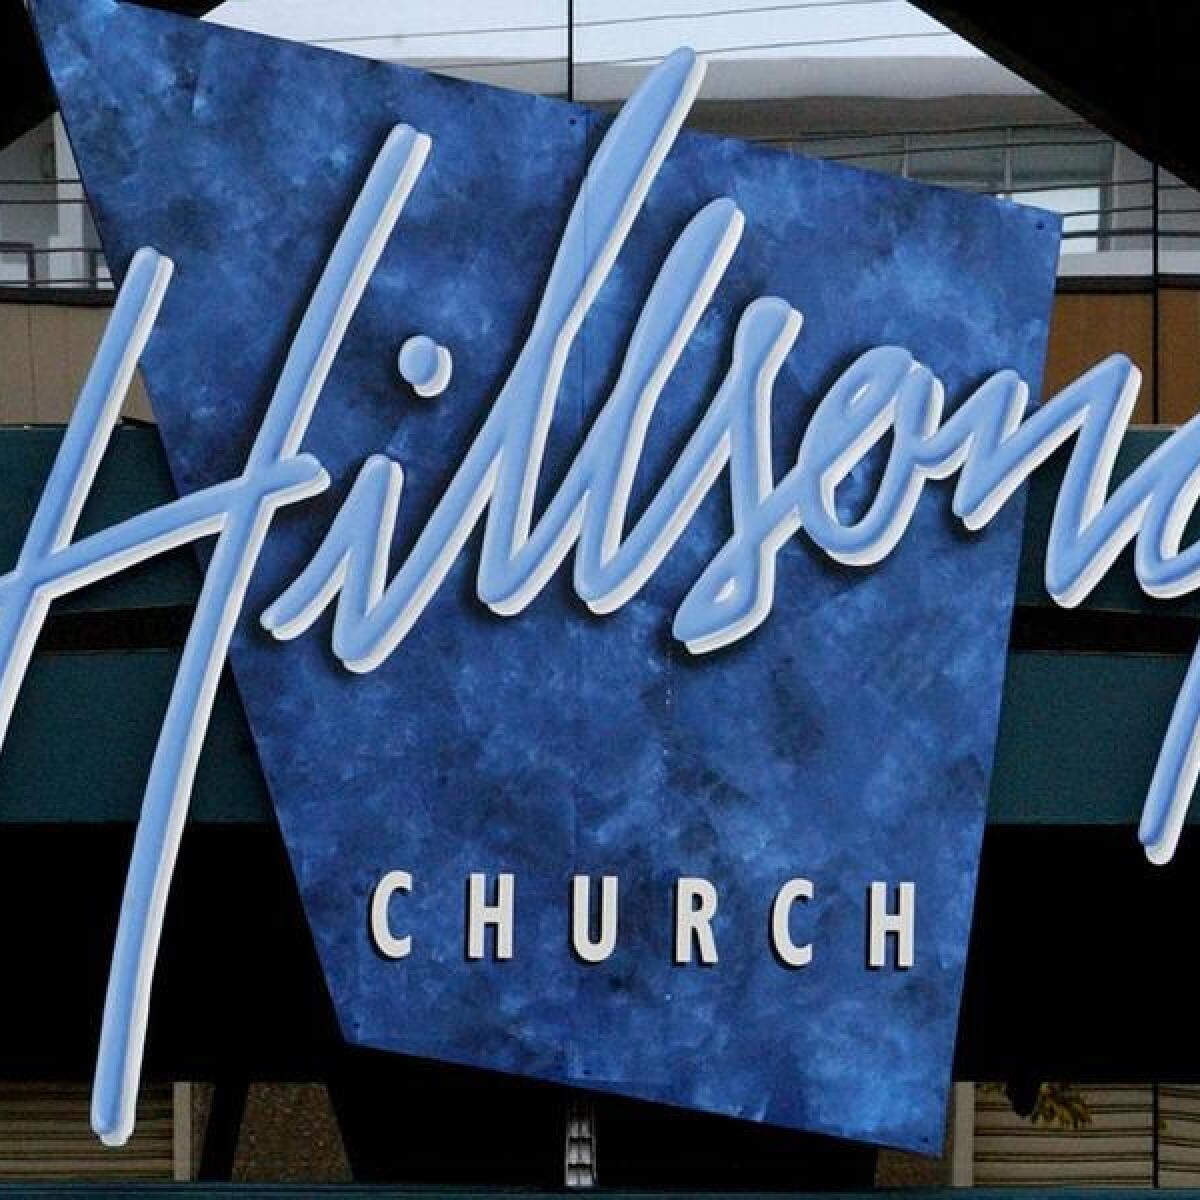 Hillsong Church signage (file image)